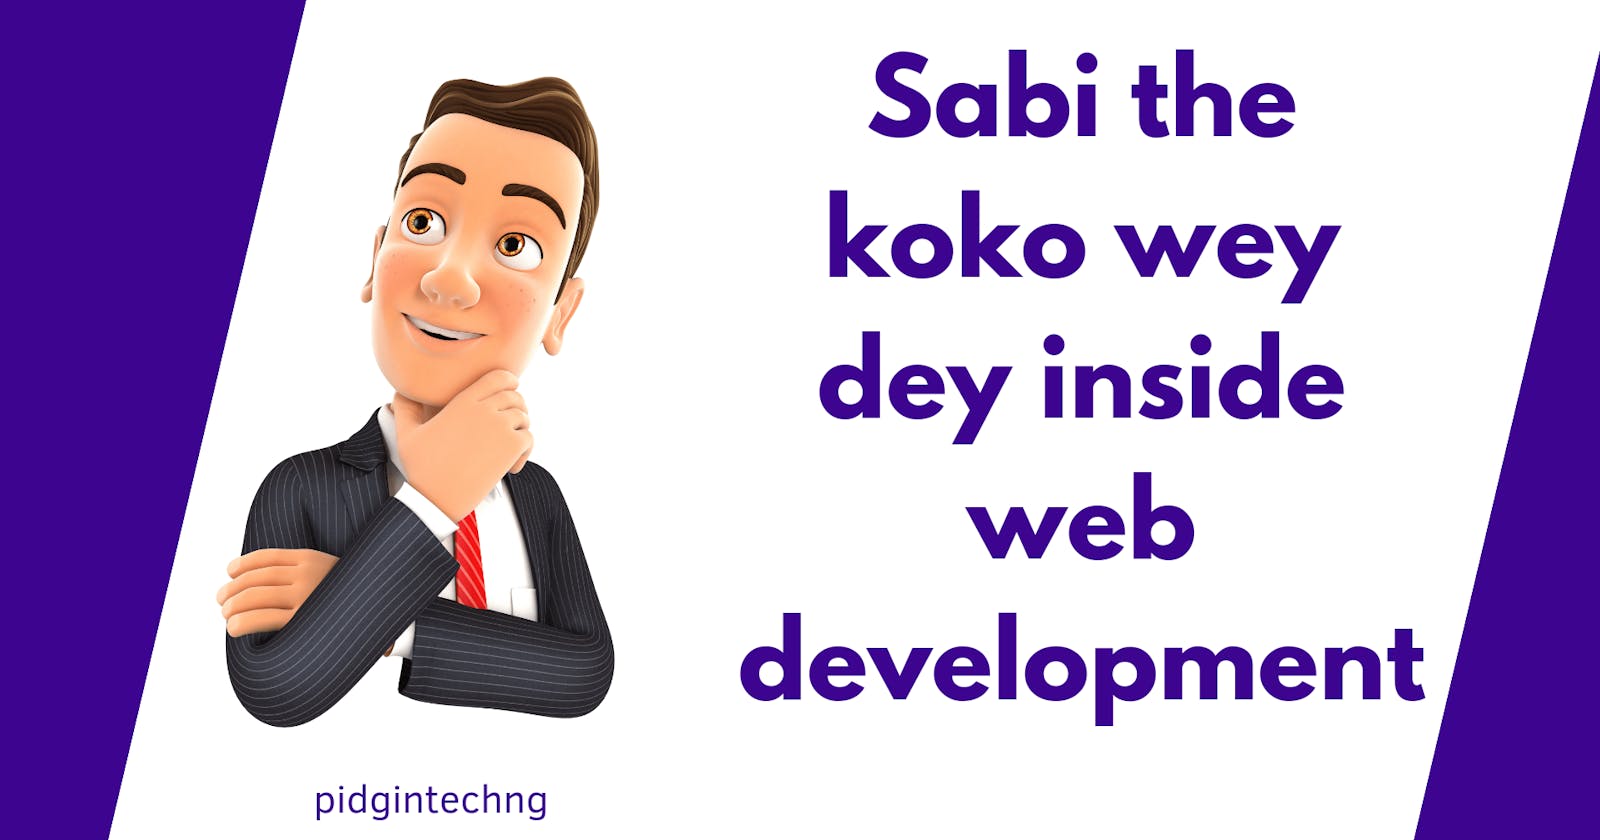 Sabi the koko wey dey inside web development